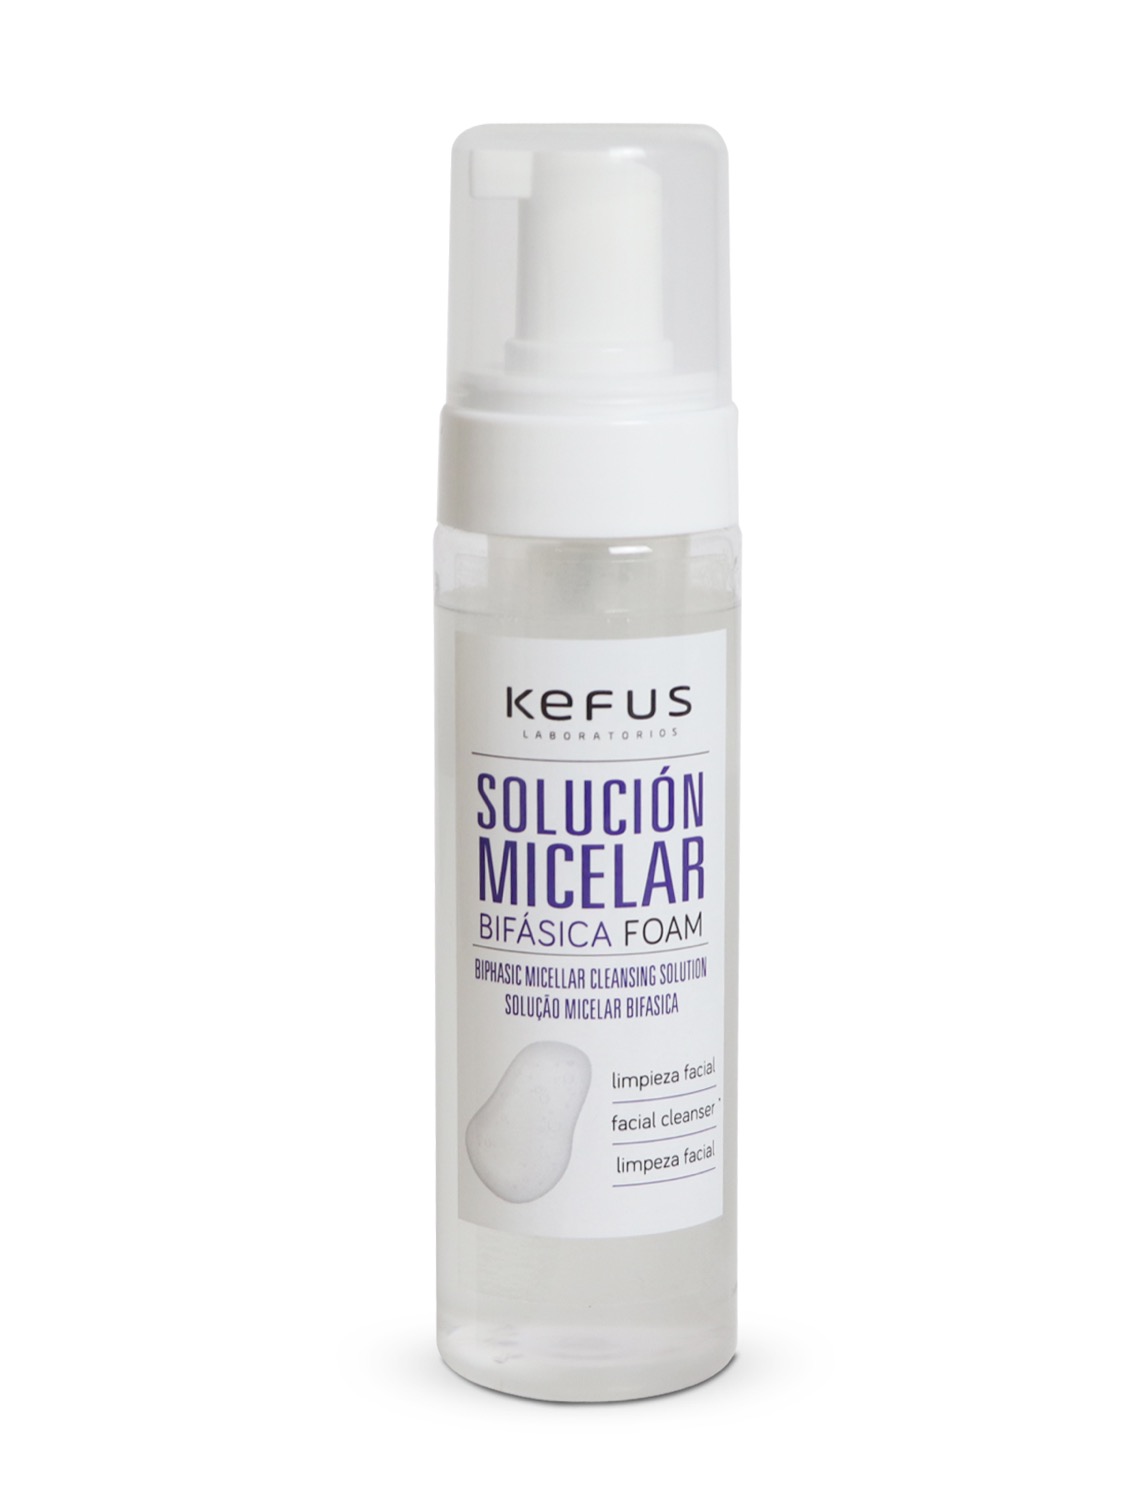 Solución micelar Bifásica Facial foam Kefus. 200 ml